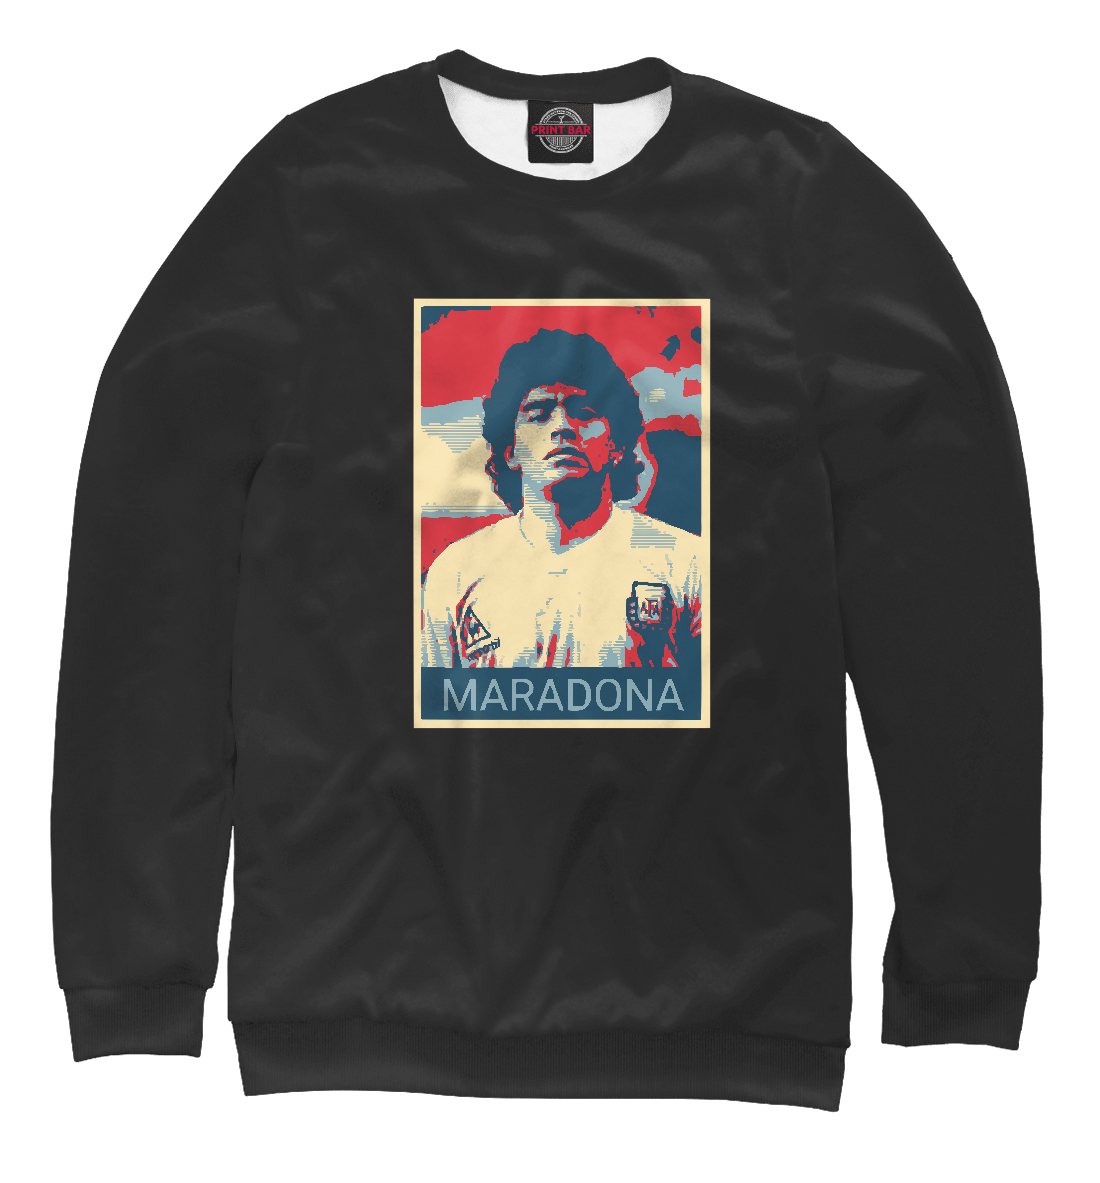 Мужской Свитшот Maradona, артикул FLT-836145-swi-2mp